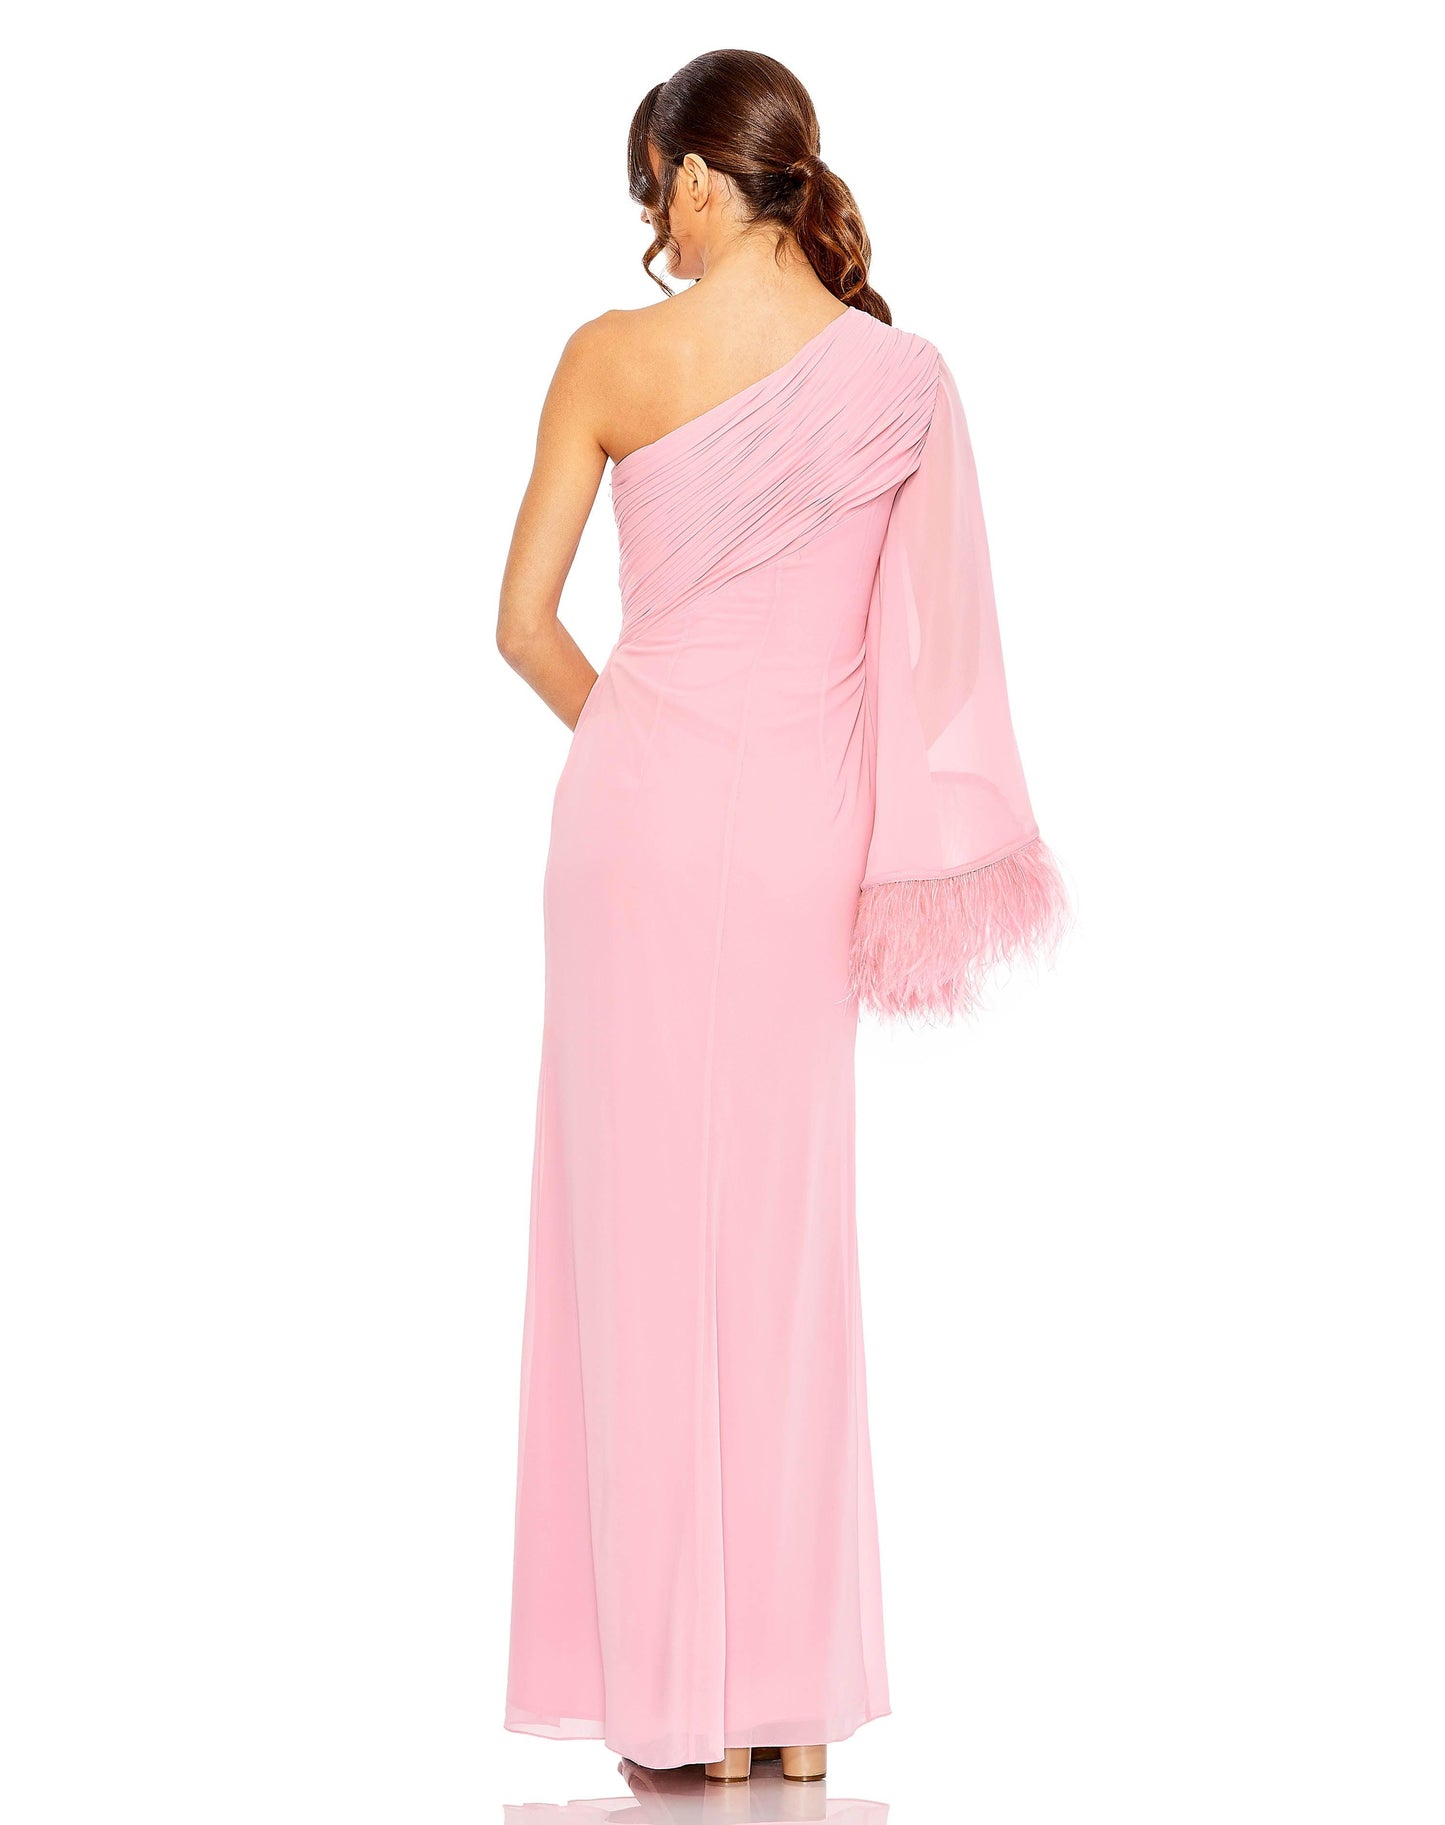 Formal Dresses Long One Shoulder Formal Chiffon Gown Rose